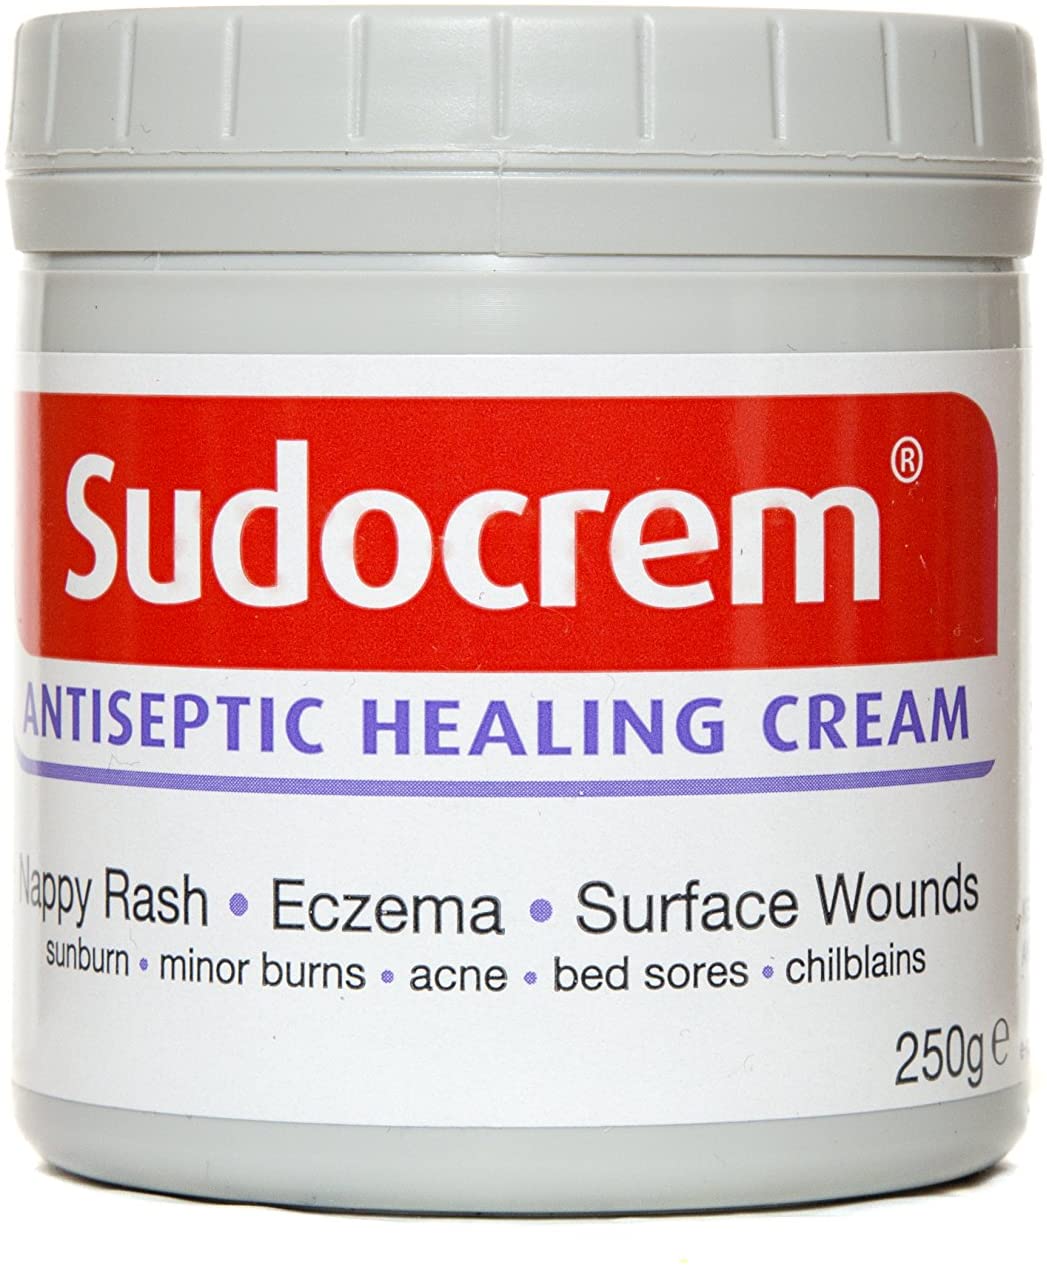 Sudocrem Antiseptic Healing Cream For Nappy Rash, Eczema, Burns